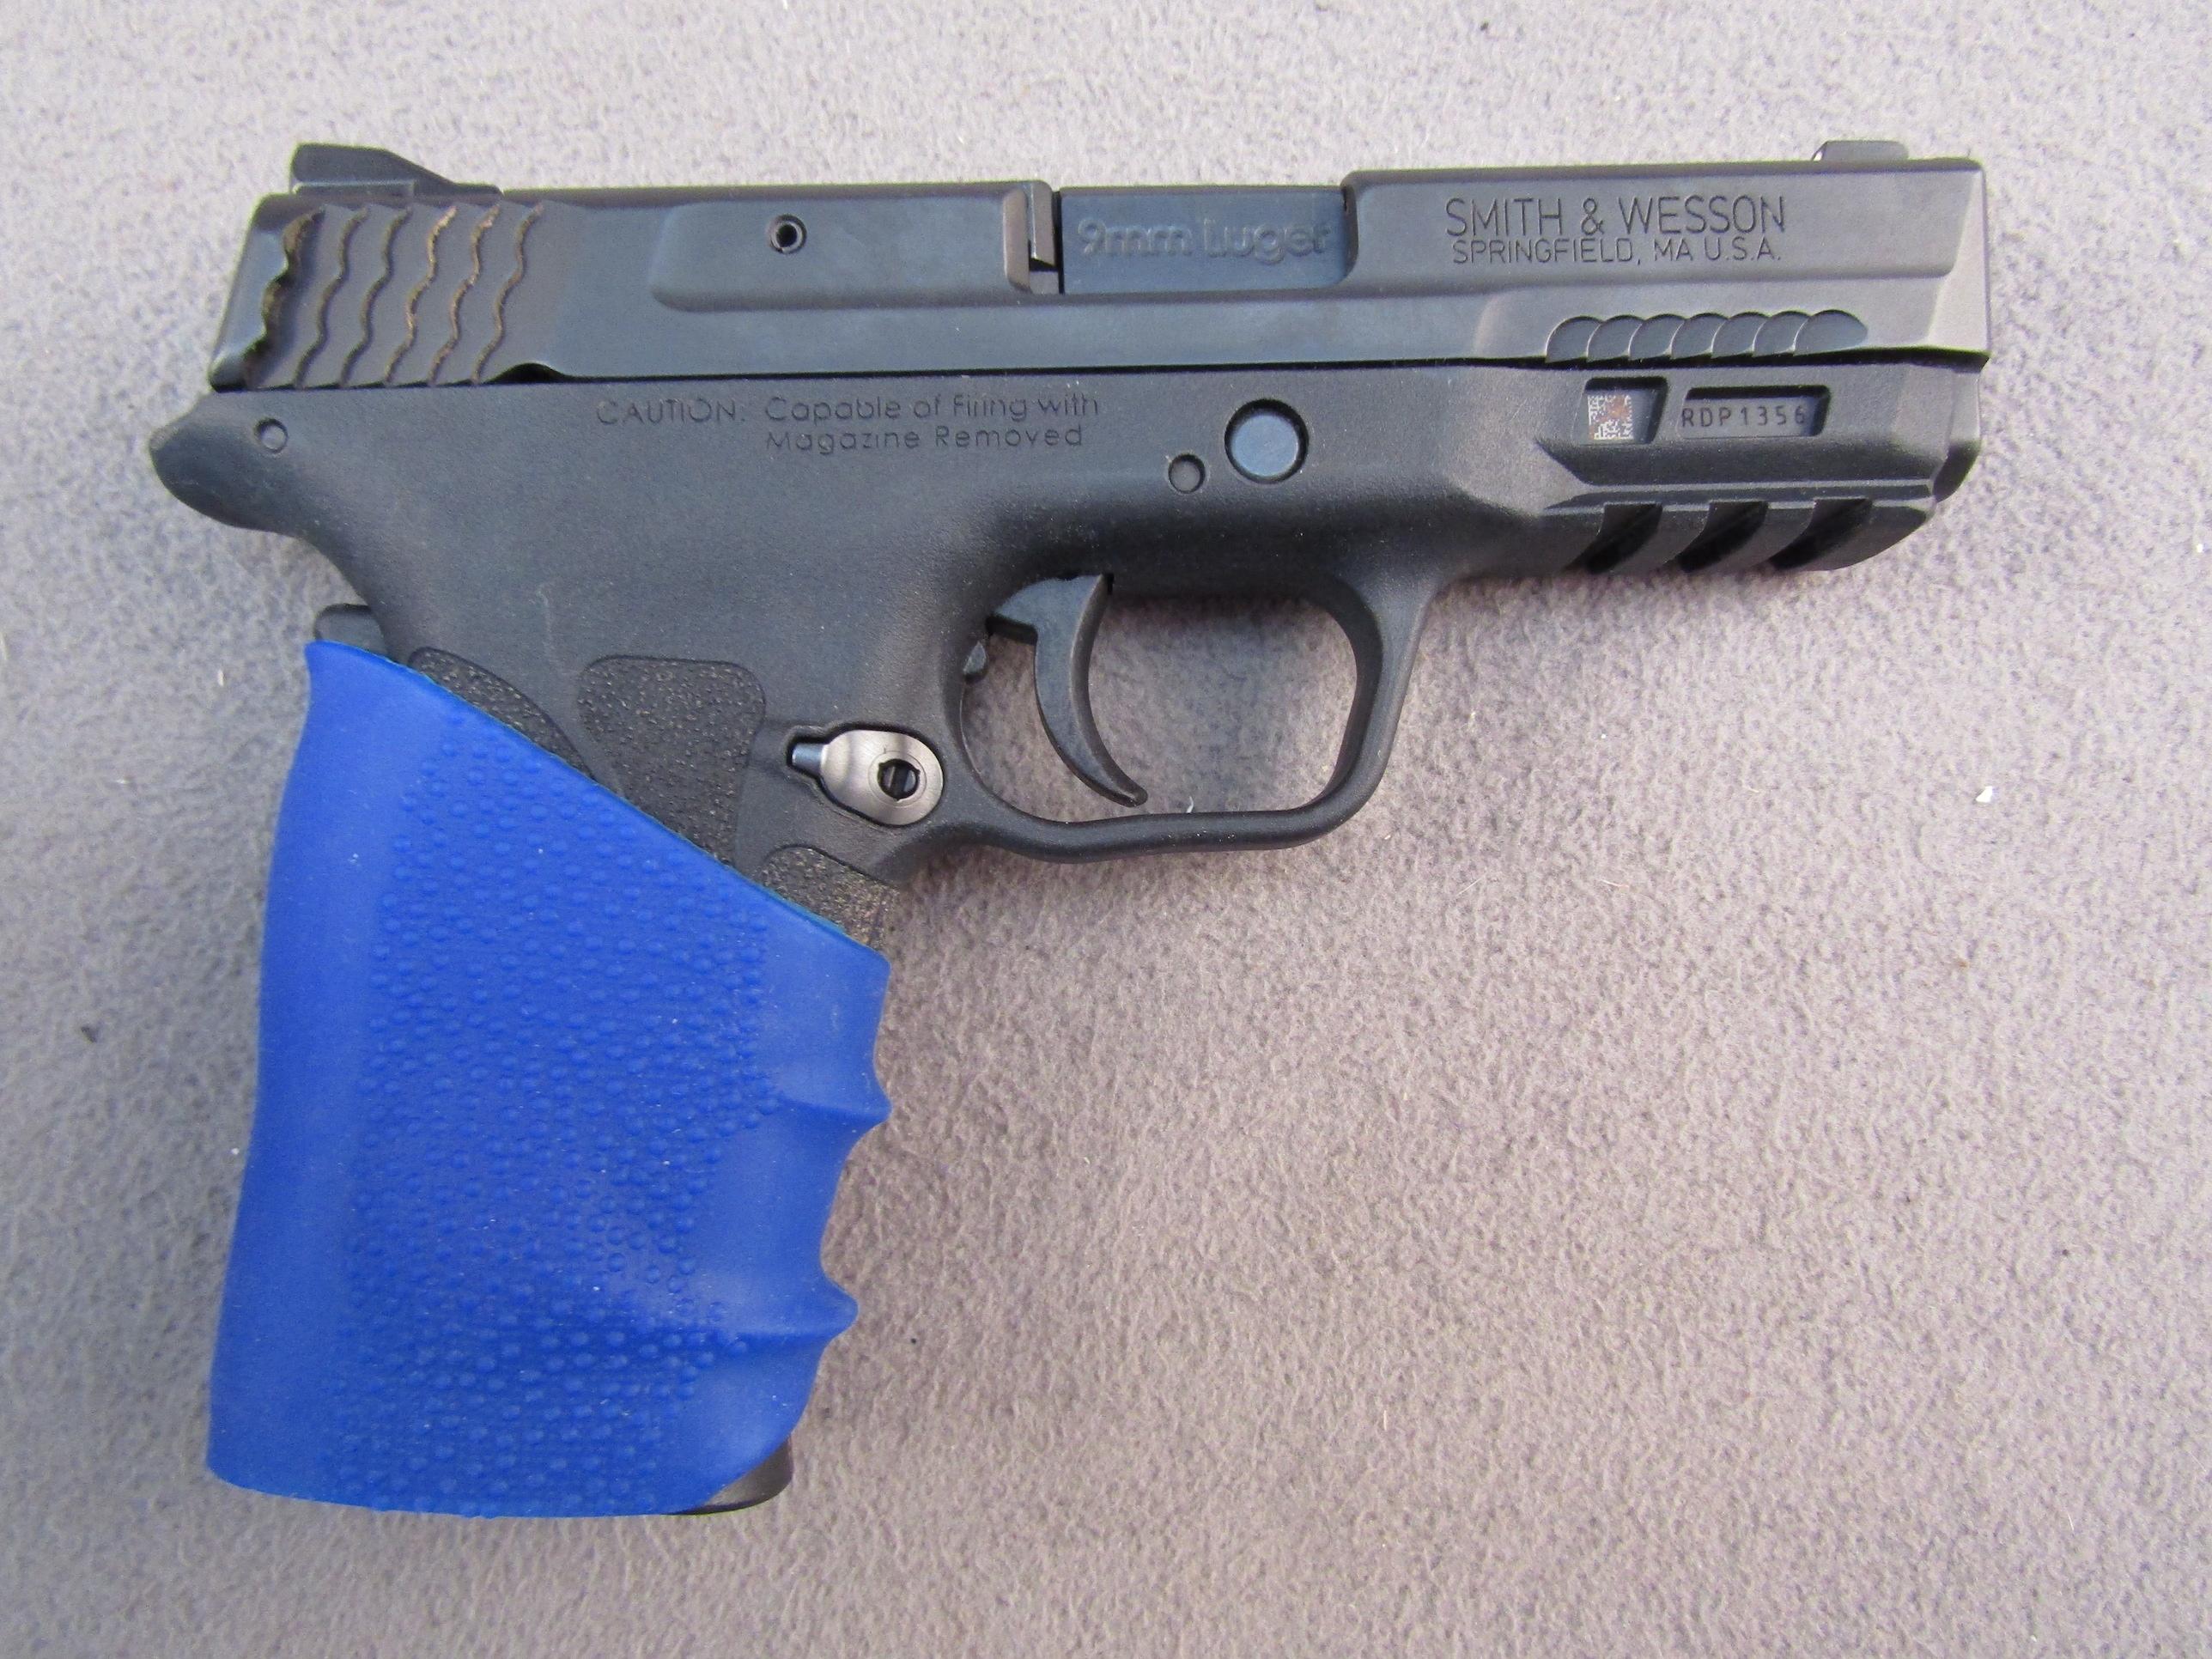 handgun: S&W Model M&P 9 Shield, Semi-Auto Pistol, 9mm, 8 shot, 3.5" barrel, S#RDP1356